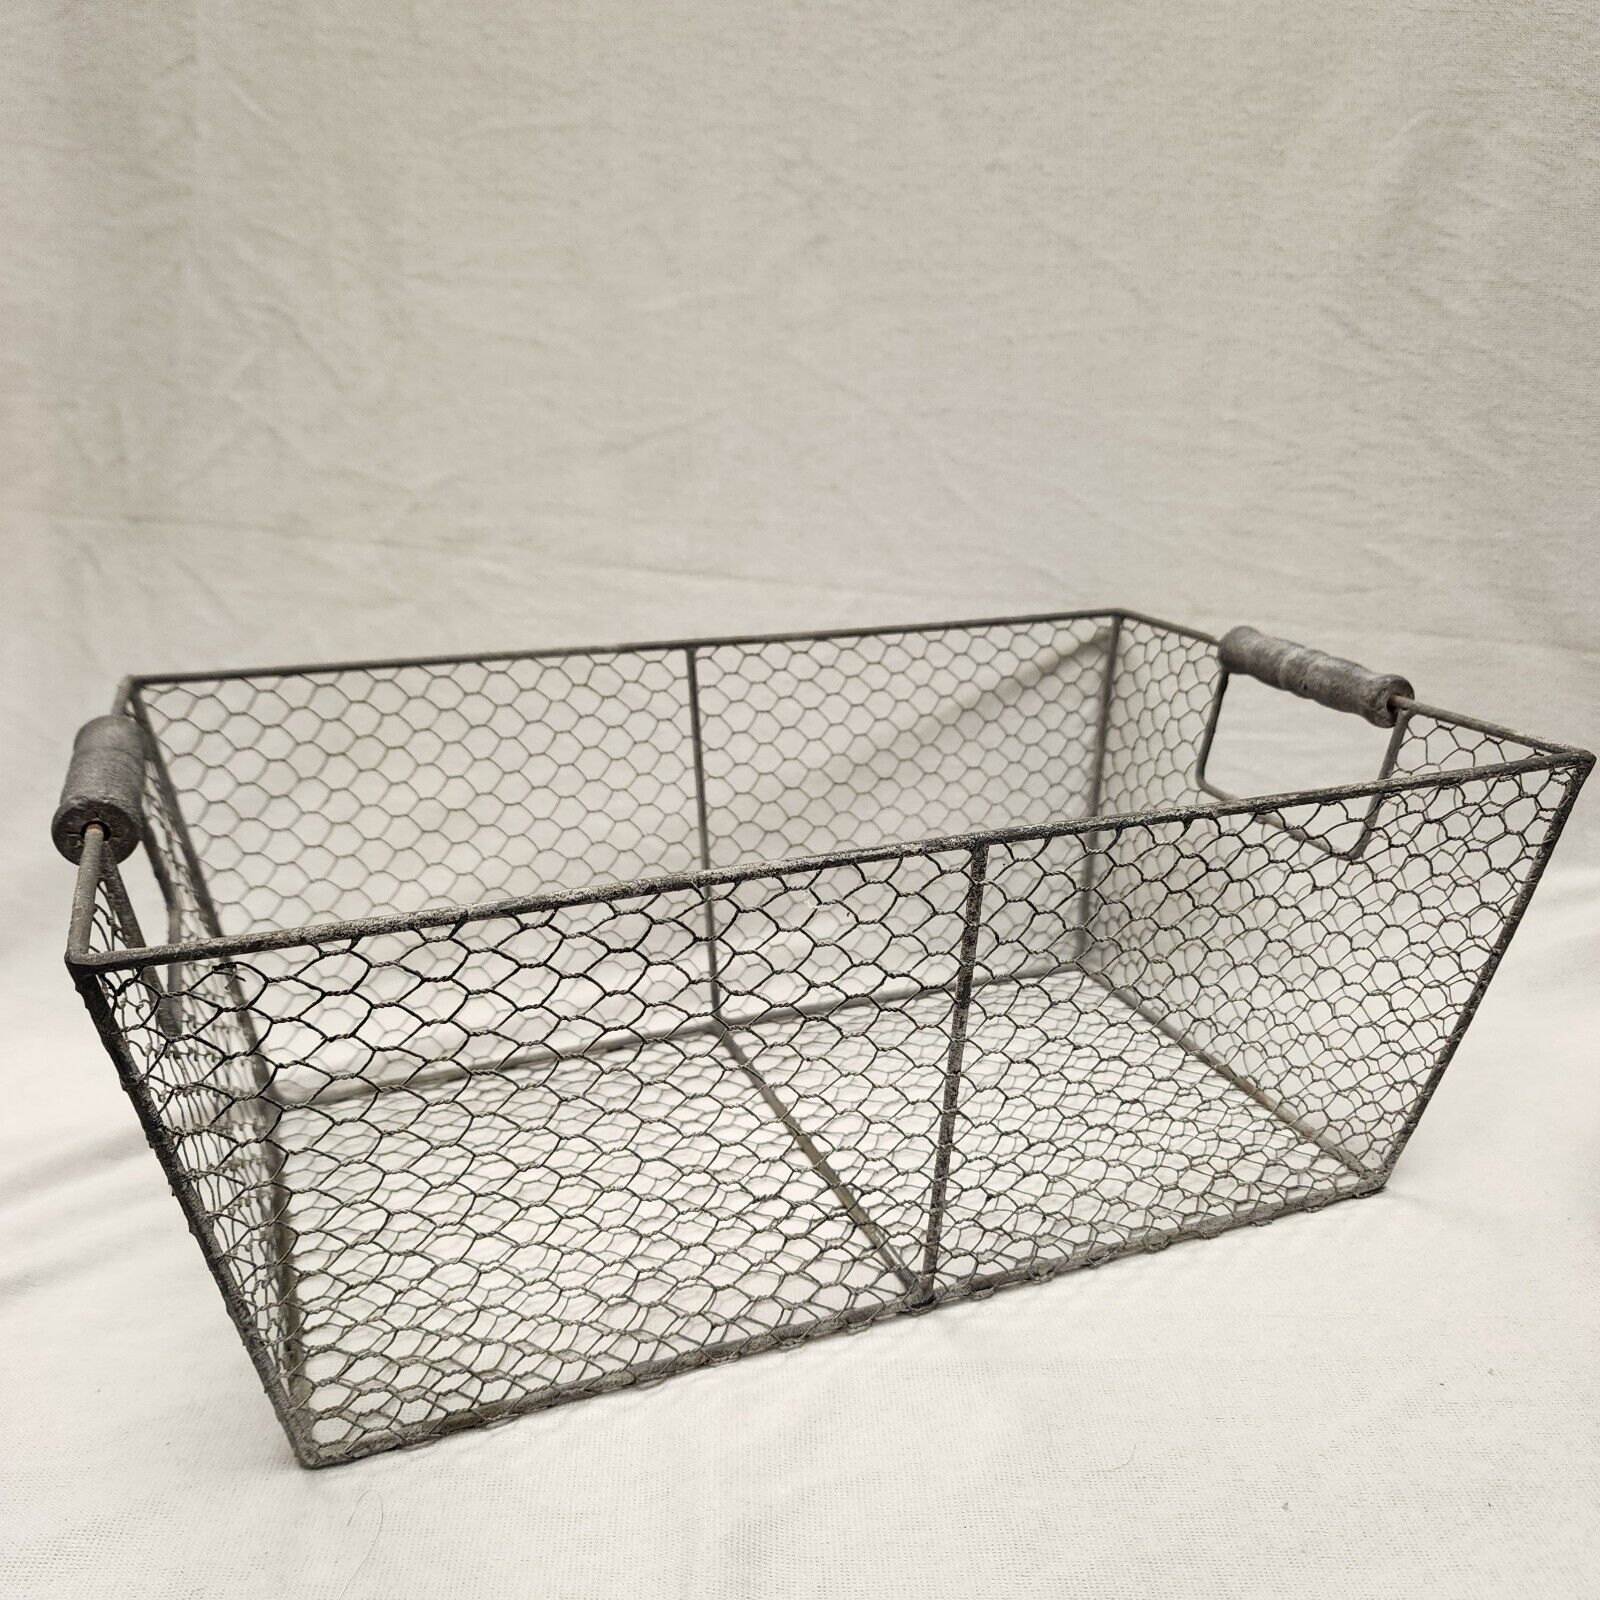 Vintage Wood Handled Chicken Wire Over Metal Sturdy Basket 16.5x10x6.5